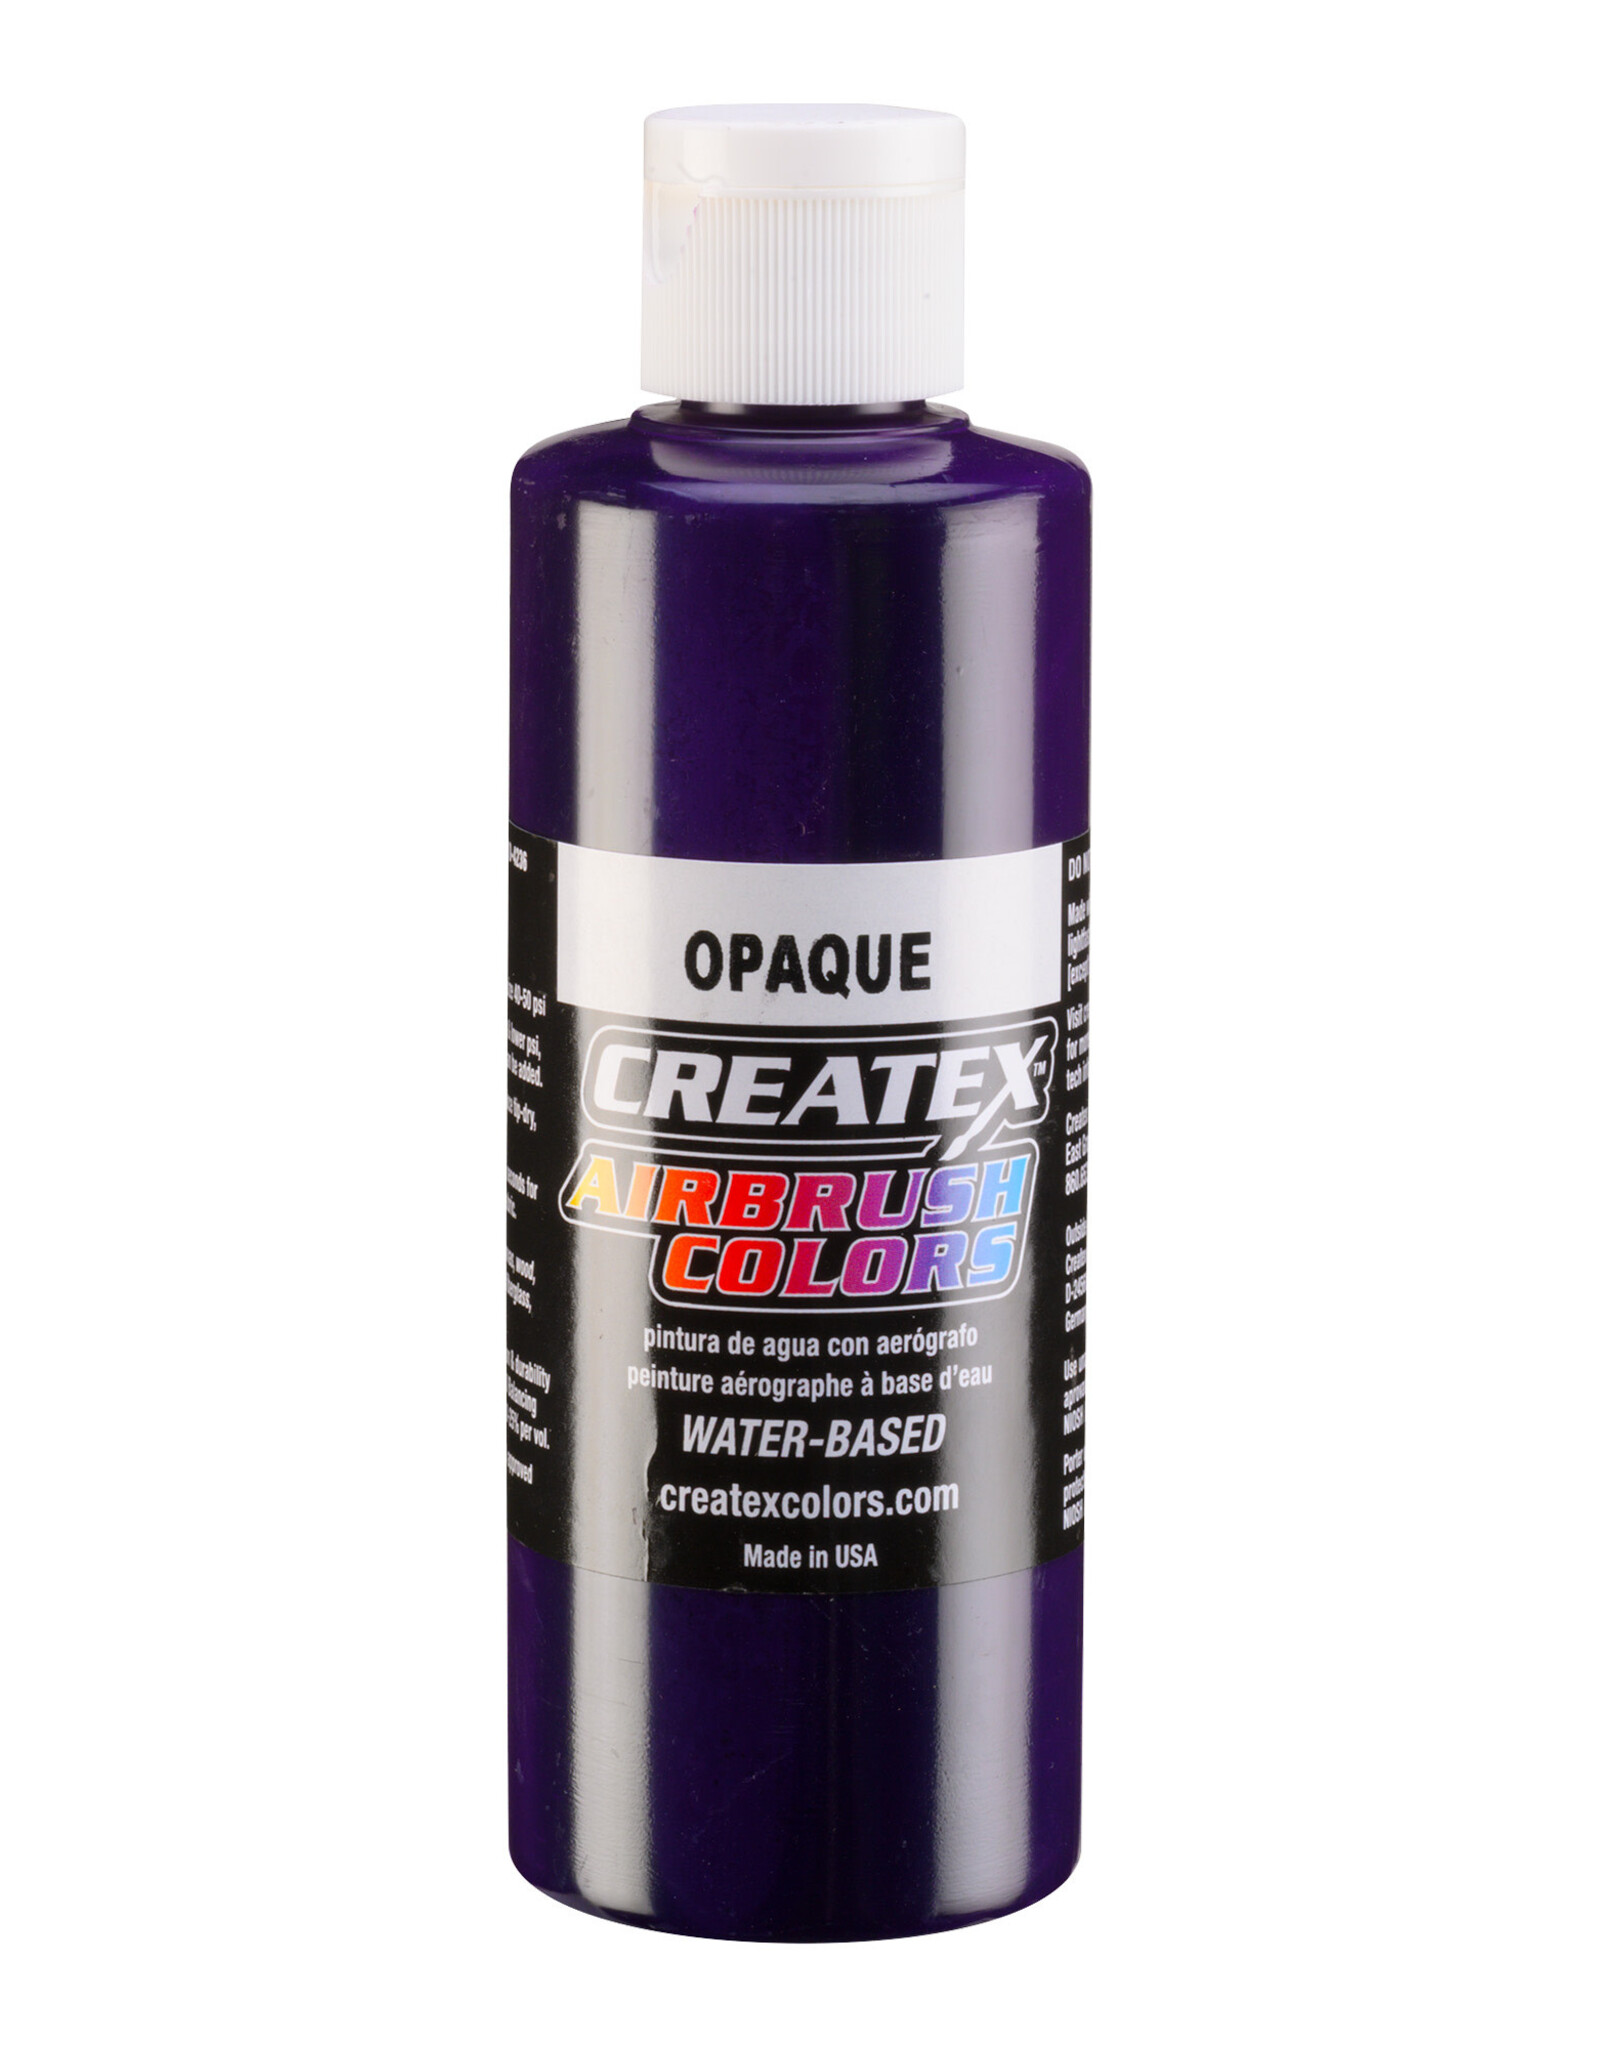 CREATEX COLORS Createx Airbrush Colors Opaque Purple, 4oz